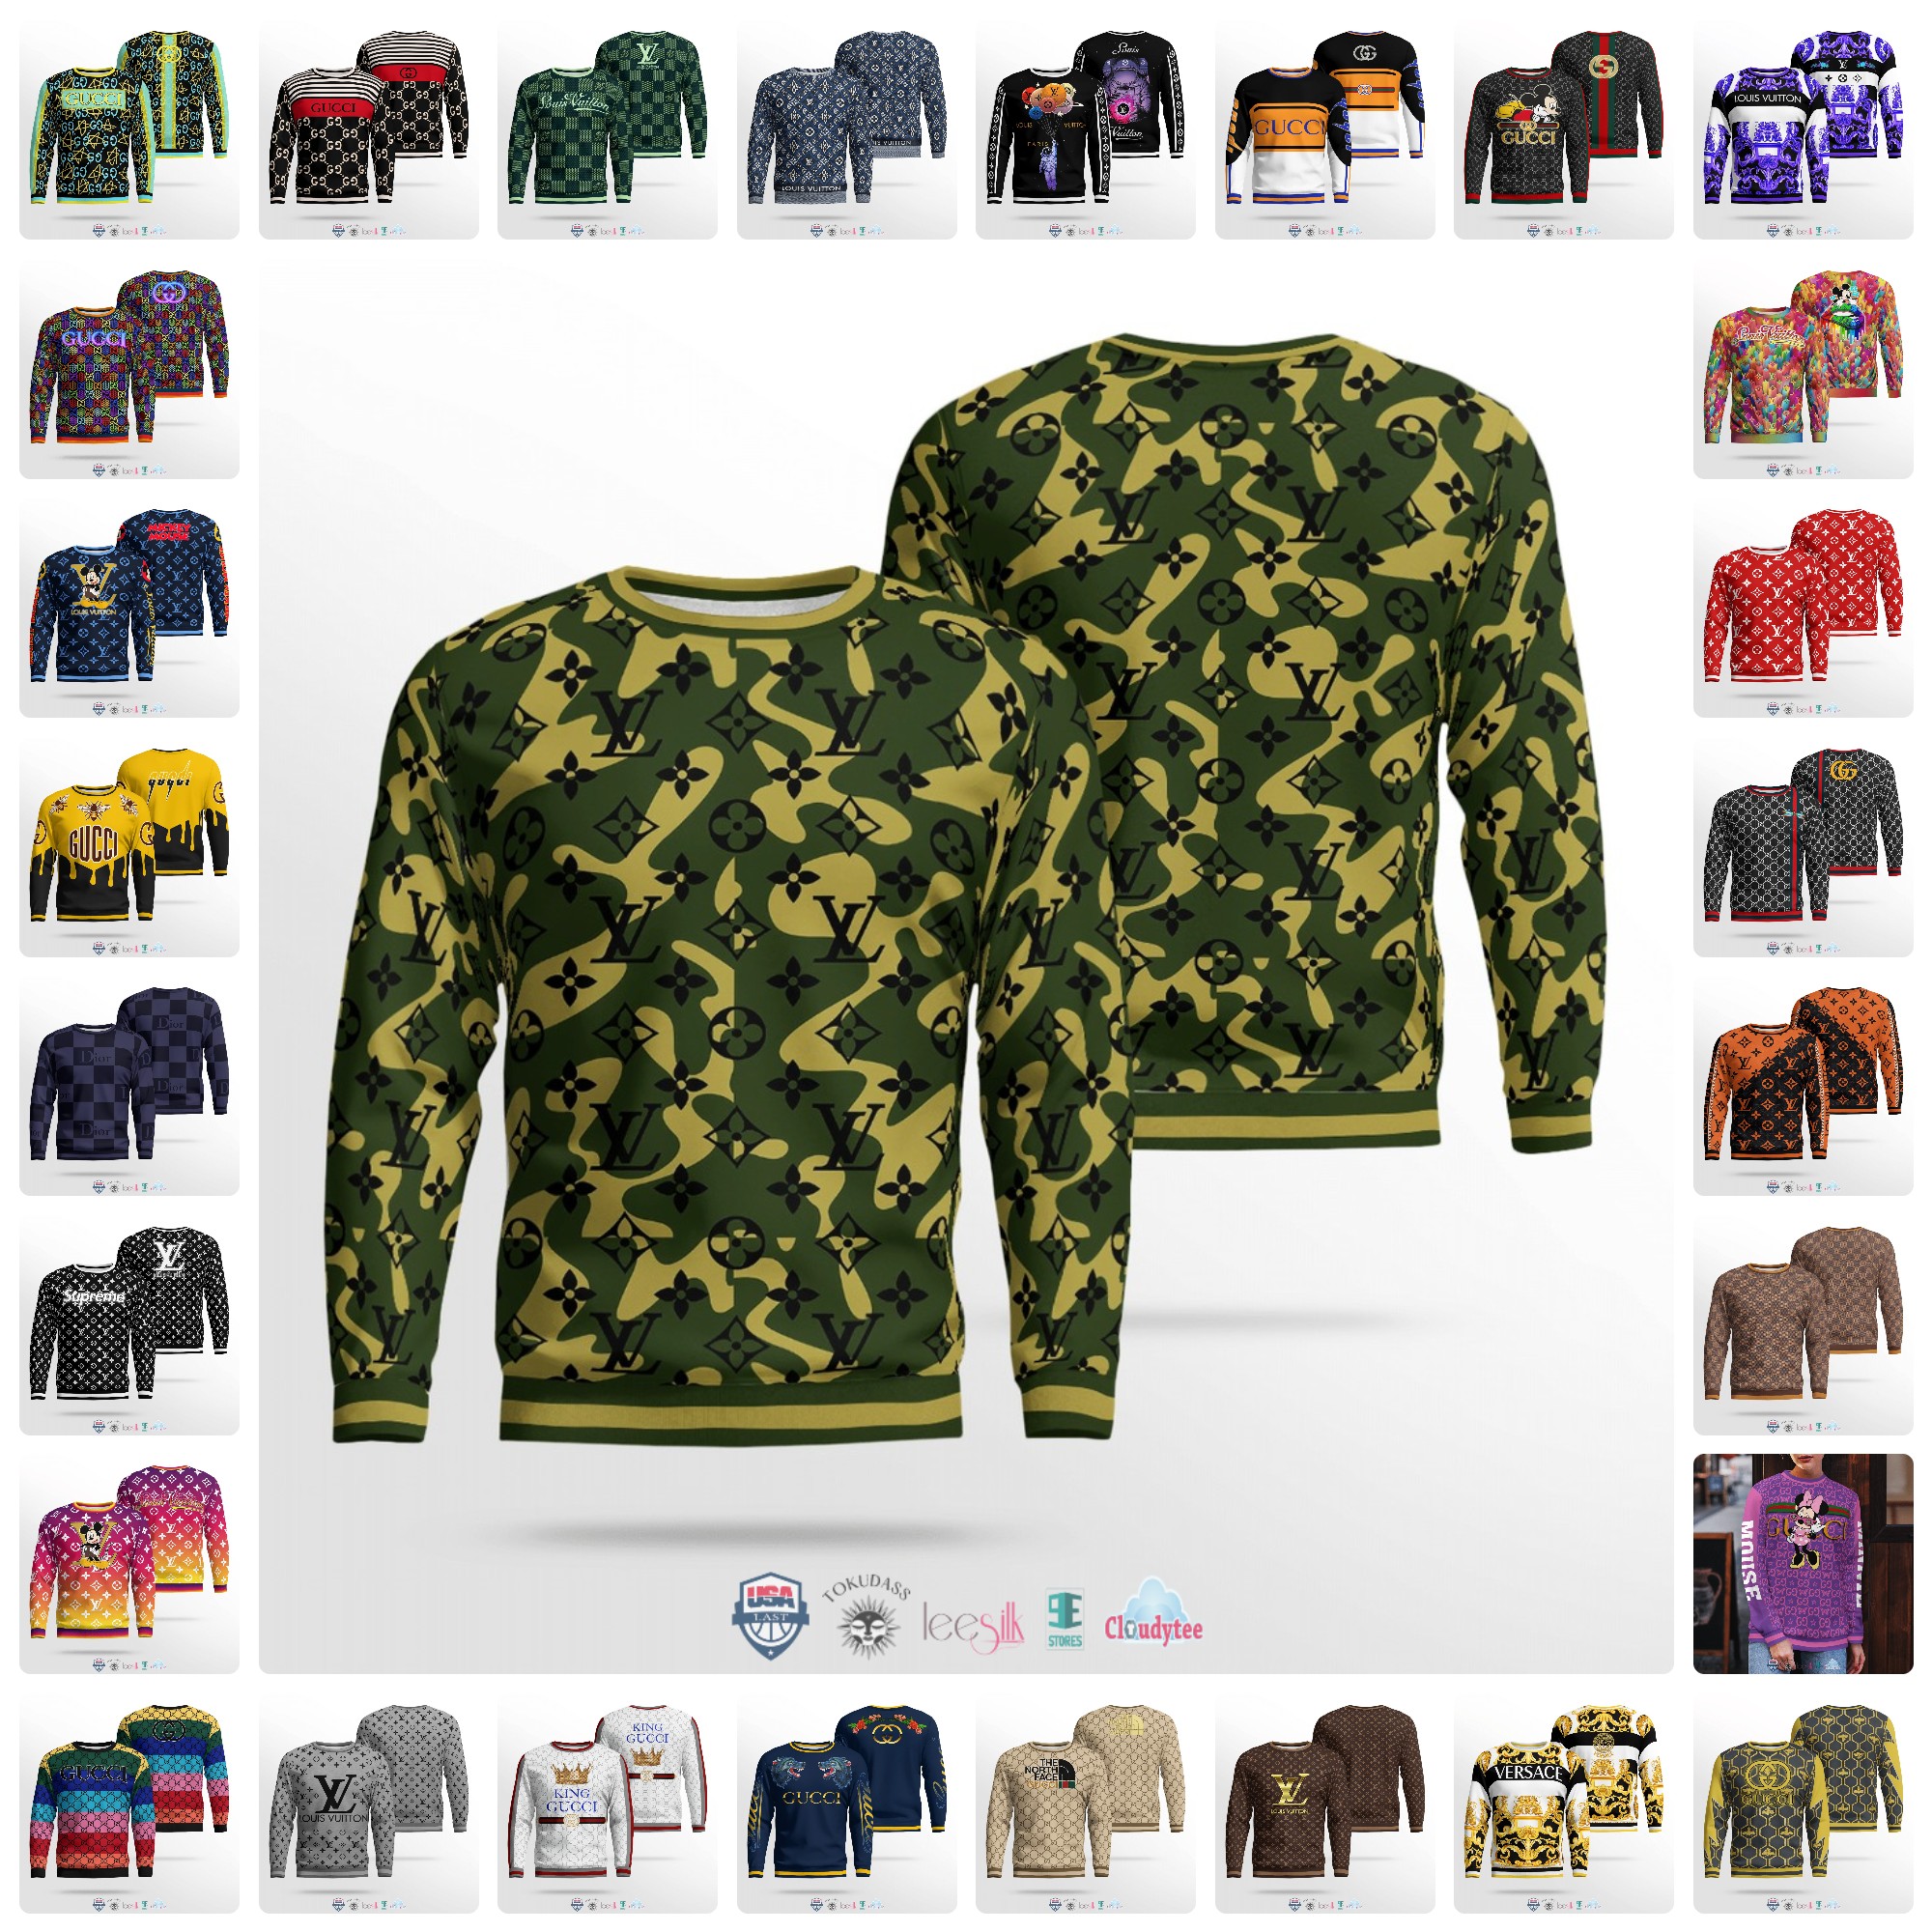 Trending Luxury Sweater, Bomber Jacket On Hothotshirt